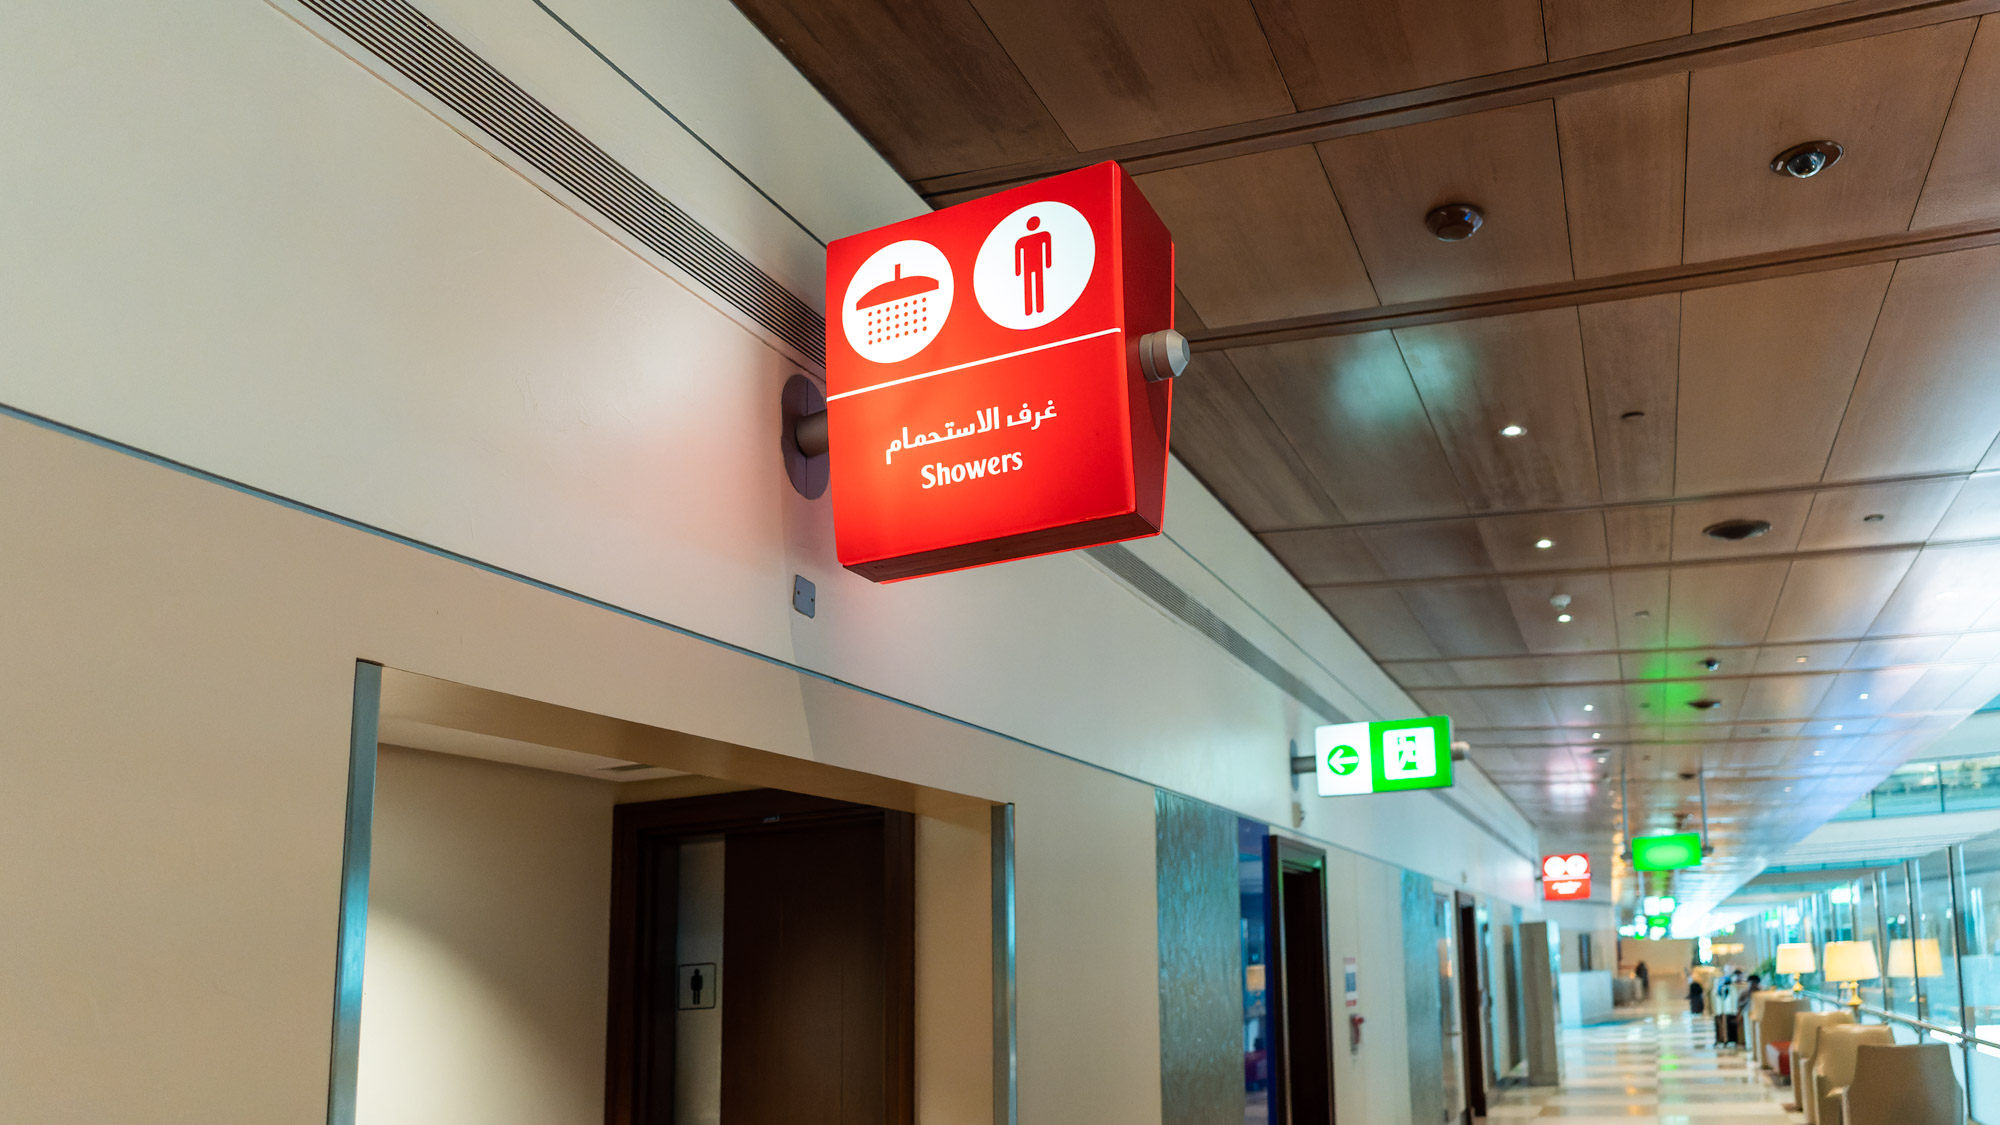 Emirates Dubai First Lounge Concourse B Amenities